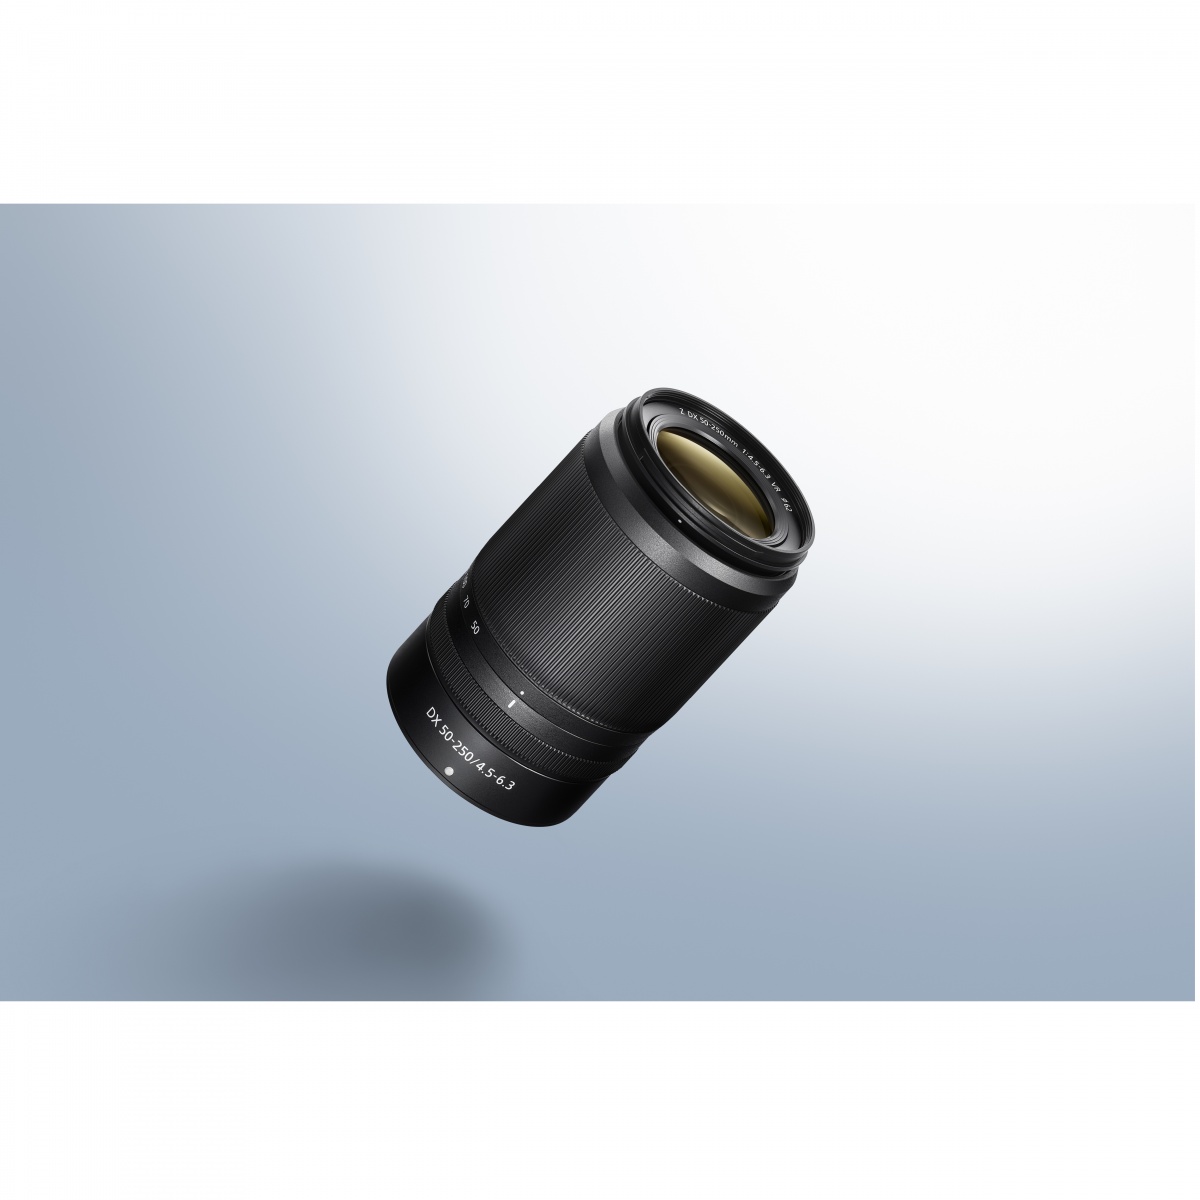 Nikon Z50 Kit mit 16-50 mm + 50-250 mm